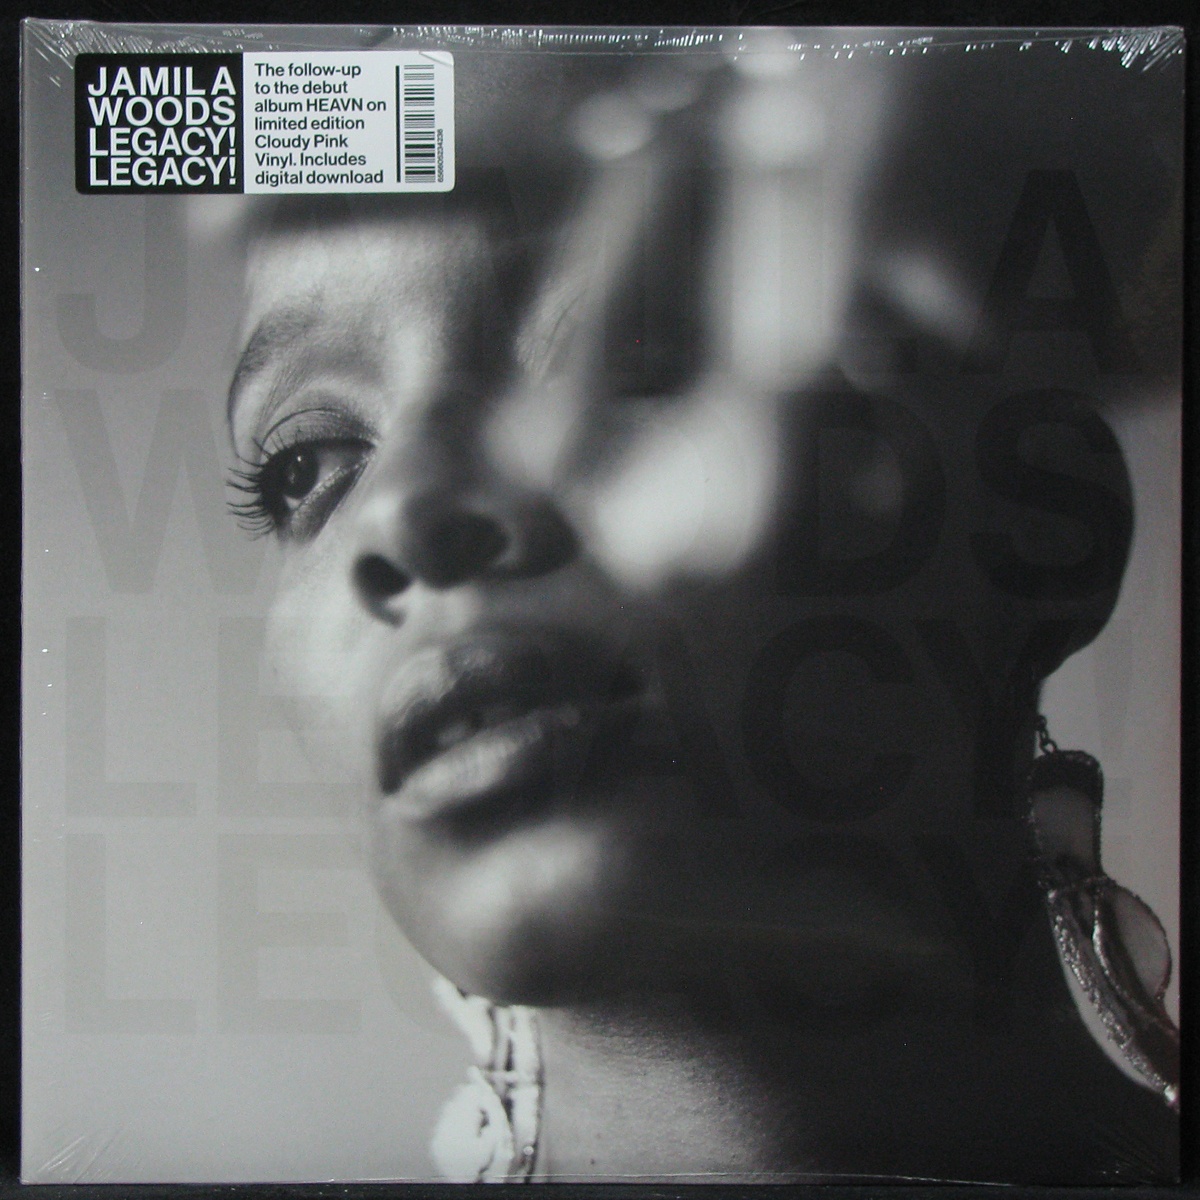 LP Jamila Woods — Legacy! Legacy! (2LP, coloured vinyl) фото